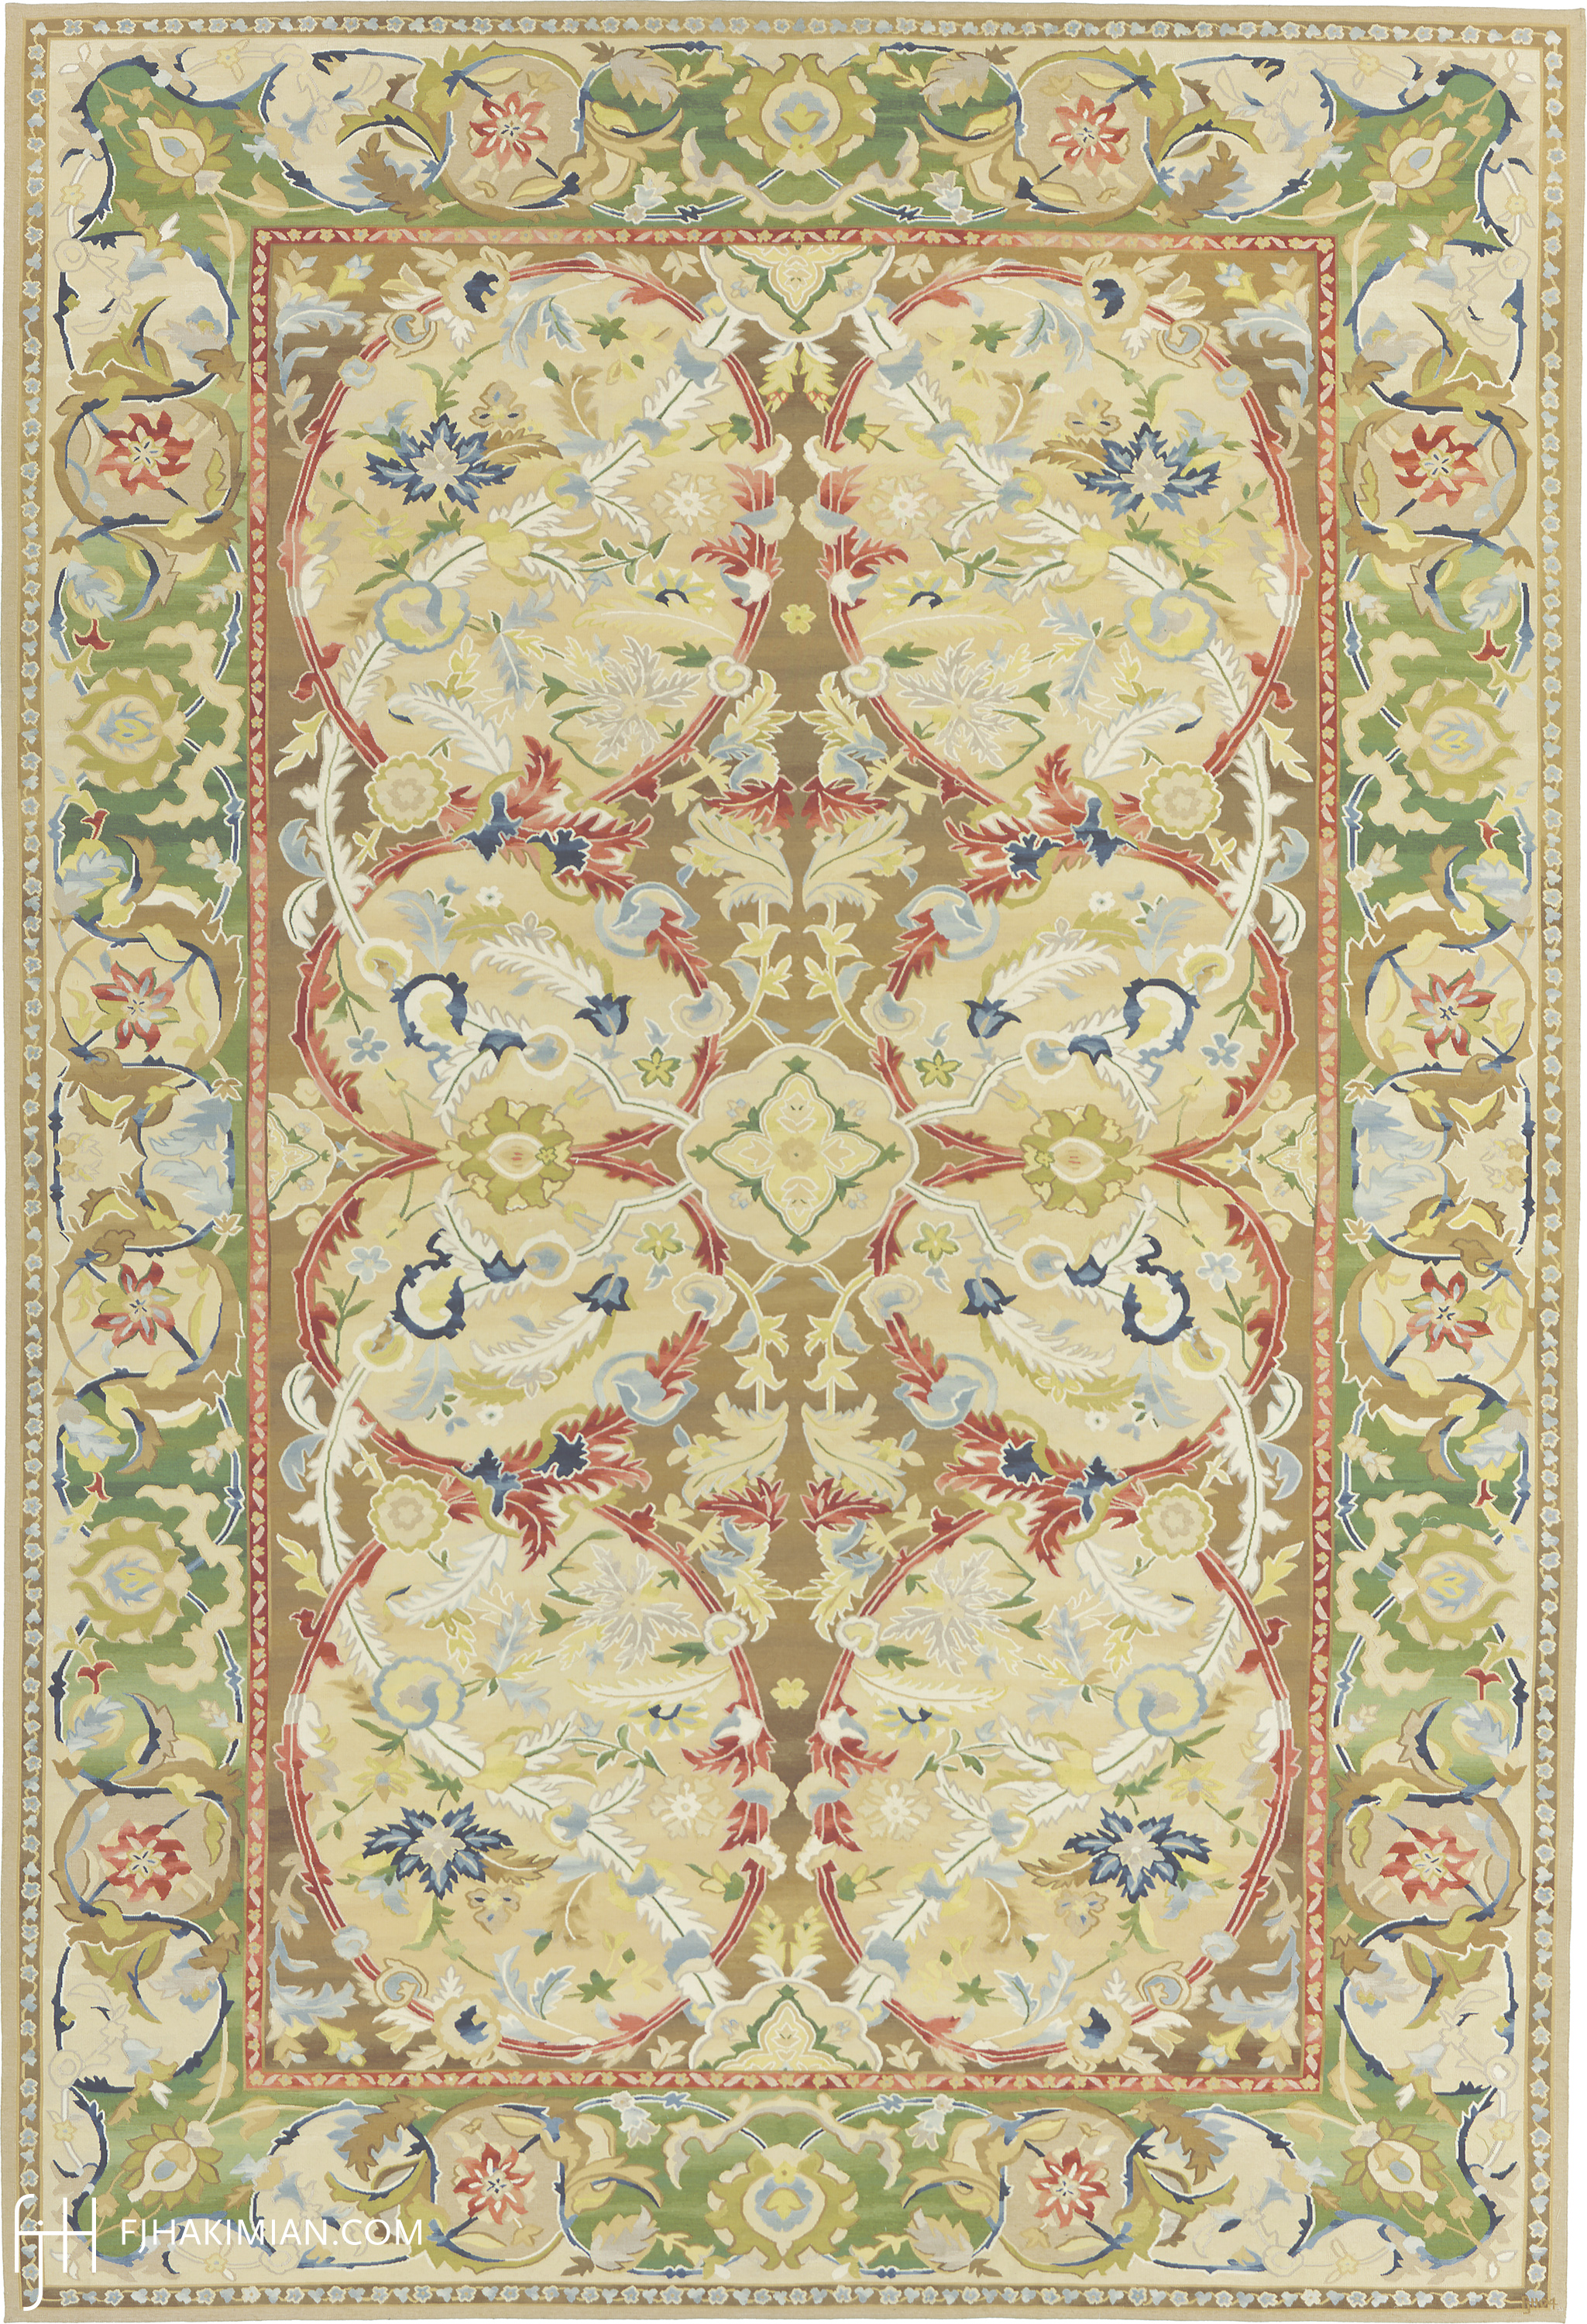 16527 Red Vine | Custom Traditional Design Carpet | FJ Hakimian | Carpet Gallery in NYC